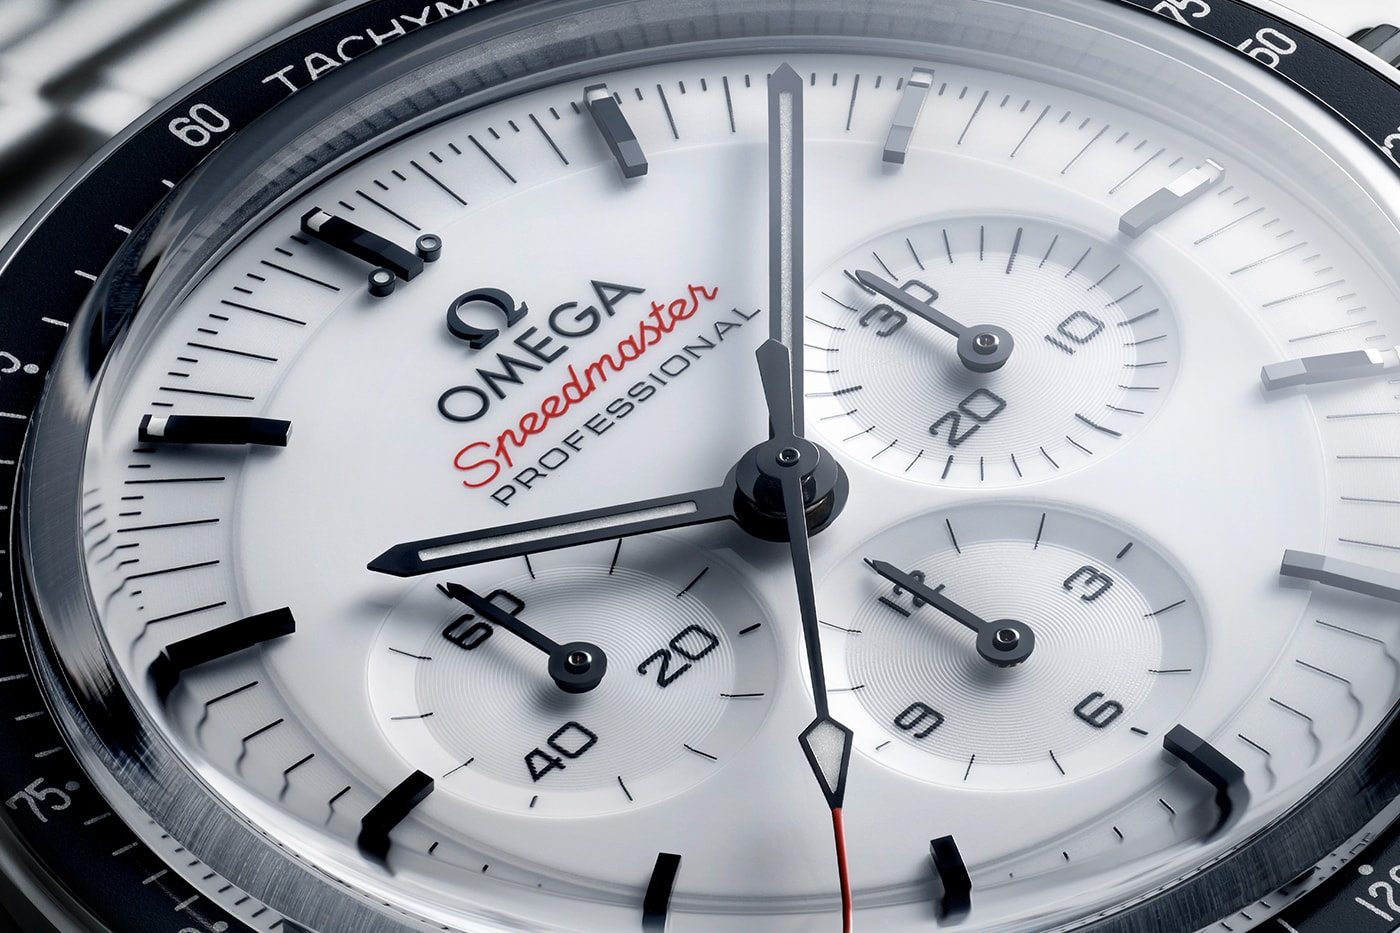 OMEGA 推出全新 Speedmaster 白面登月錶